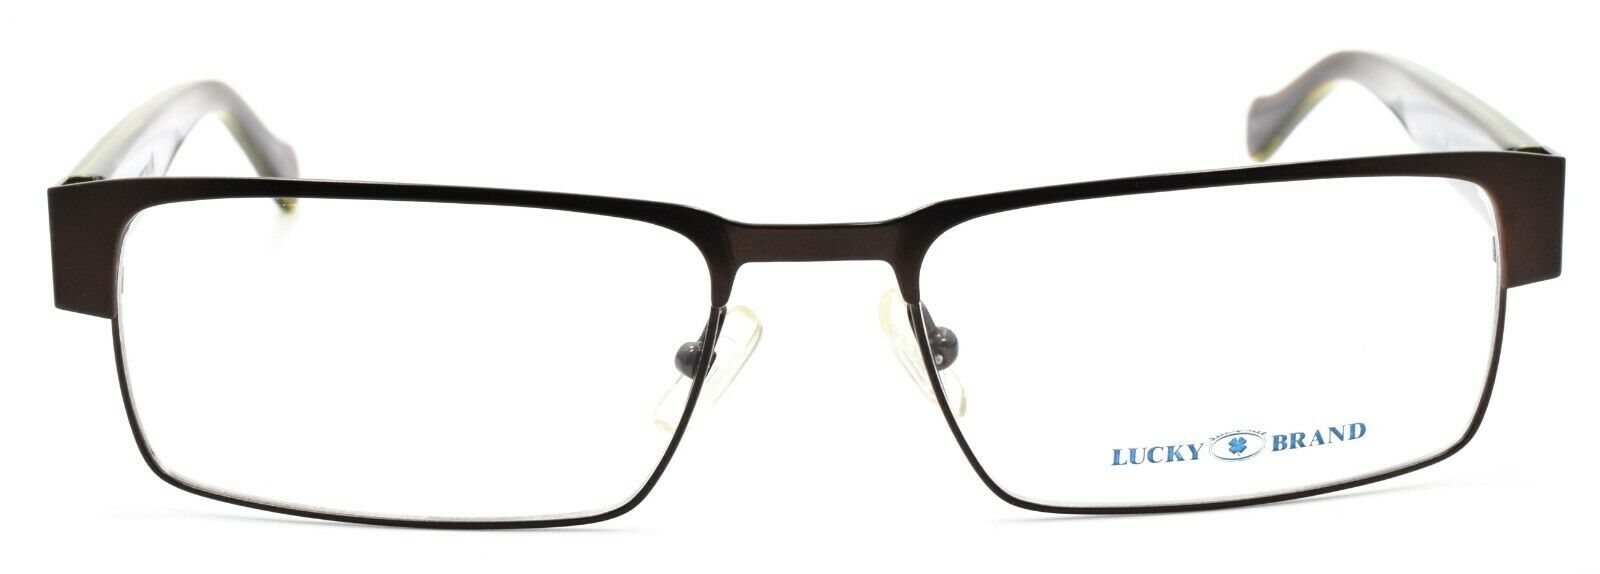 2-LUCKY BRAND Vista Men's Eyeglasses Frames 54-17-140 Brown + CASE-751286229400-IKSpecs